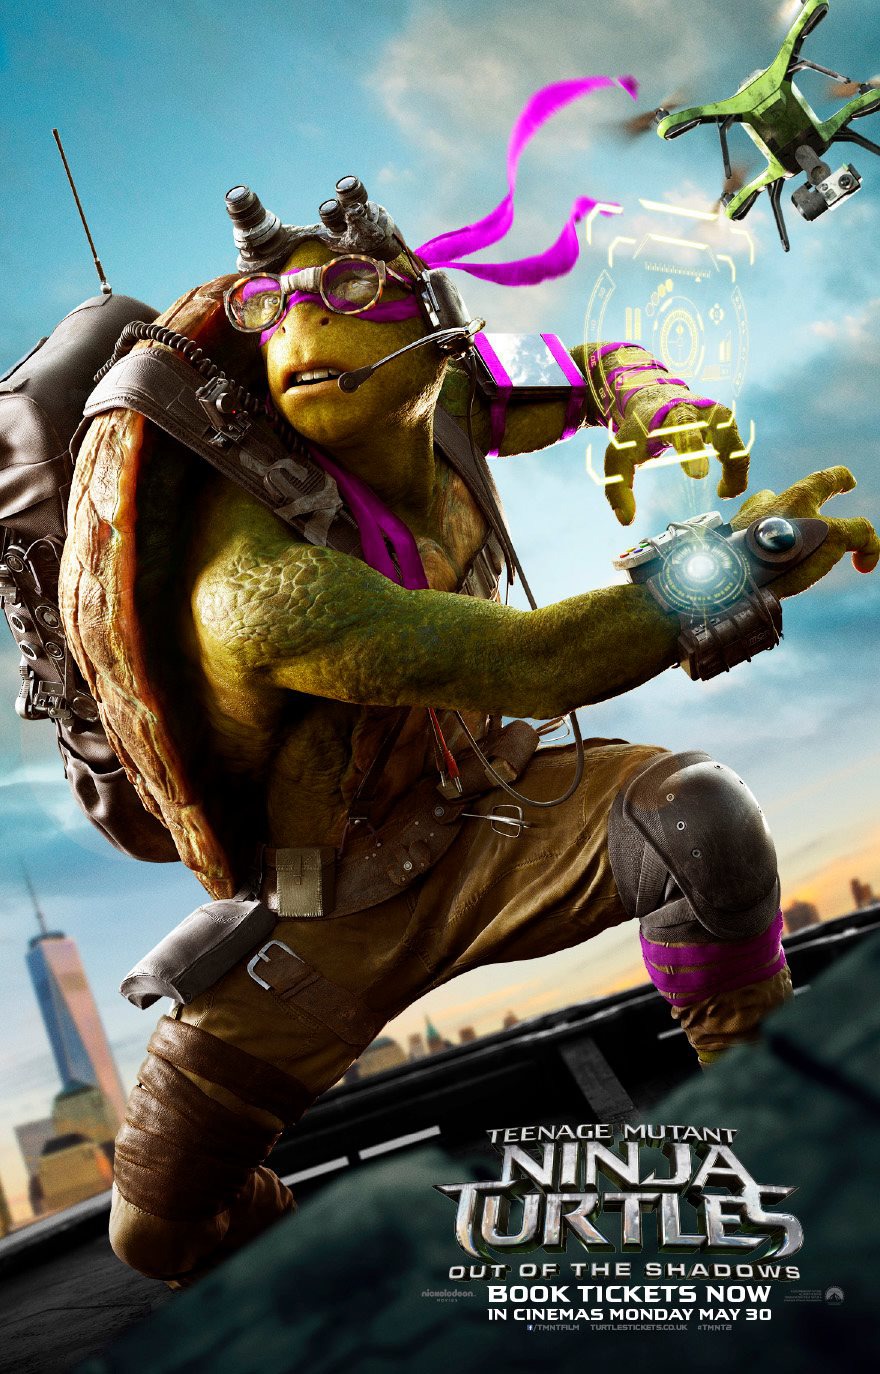 Donatello (2012 TV series), TMNTPedia